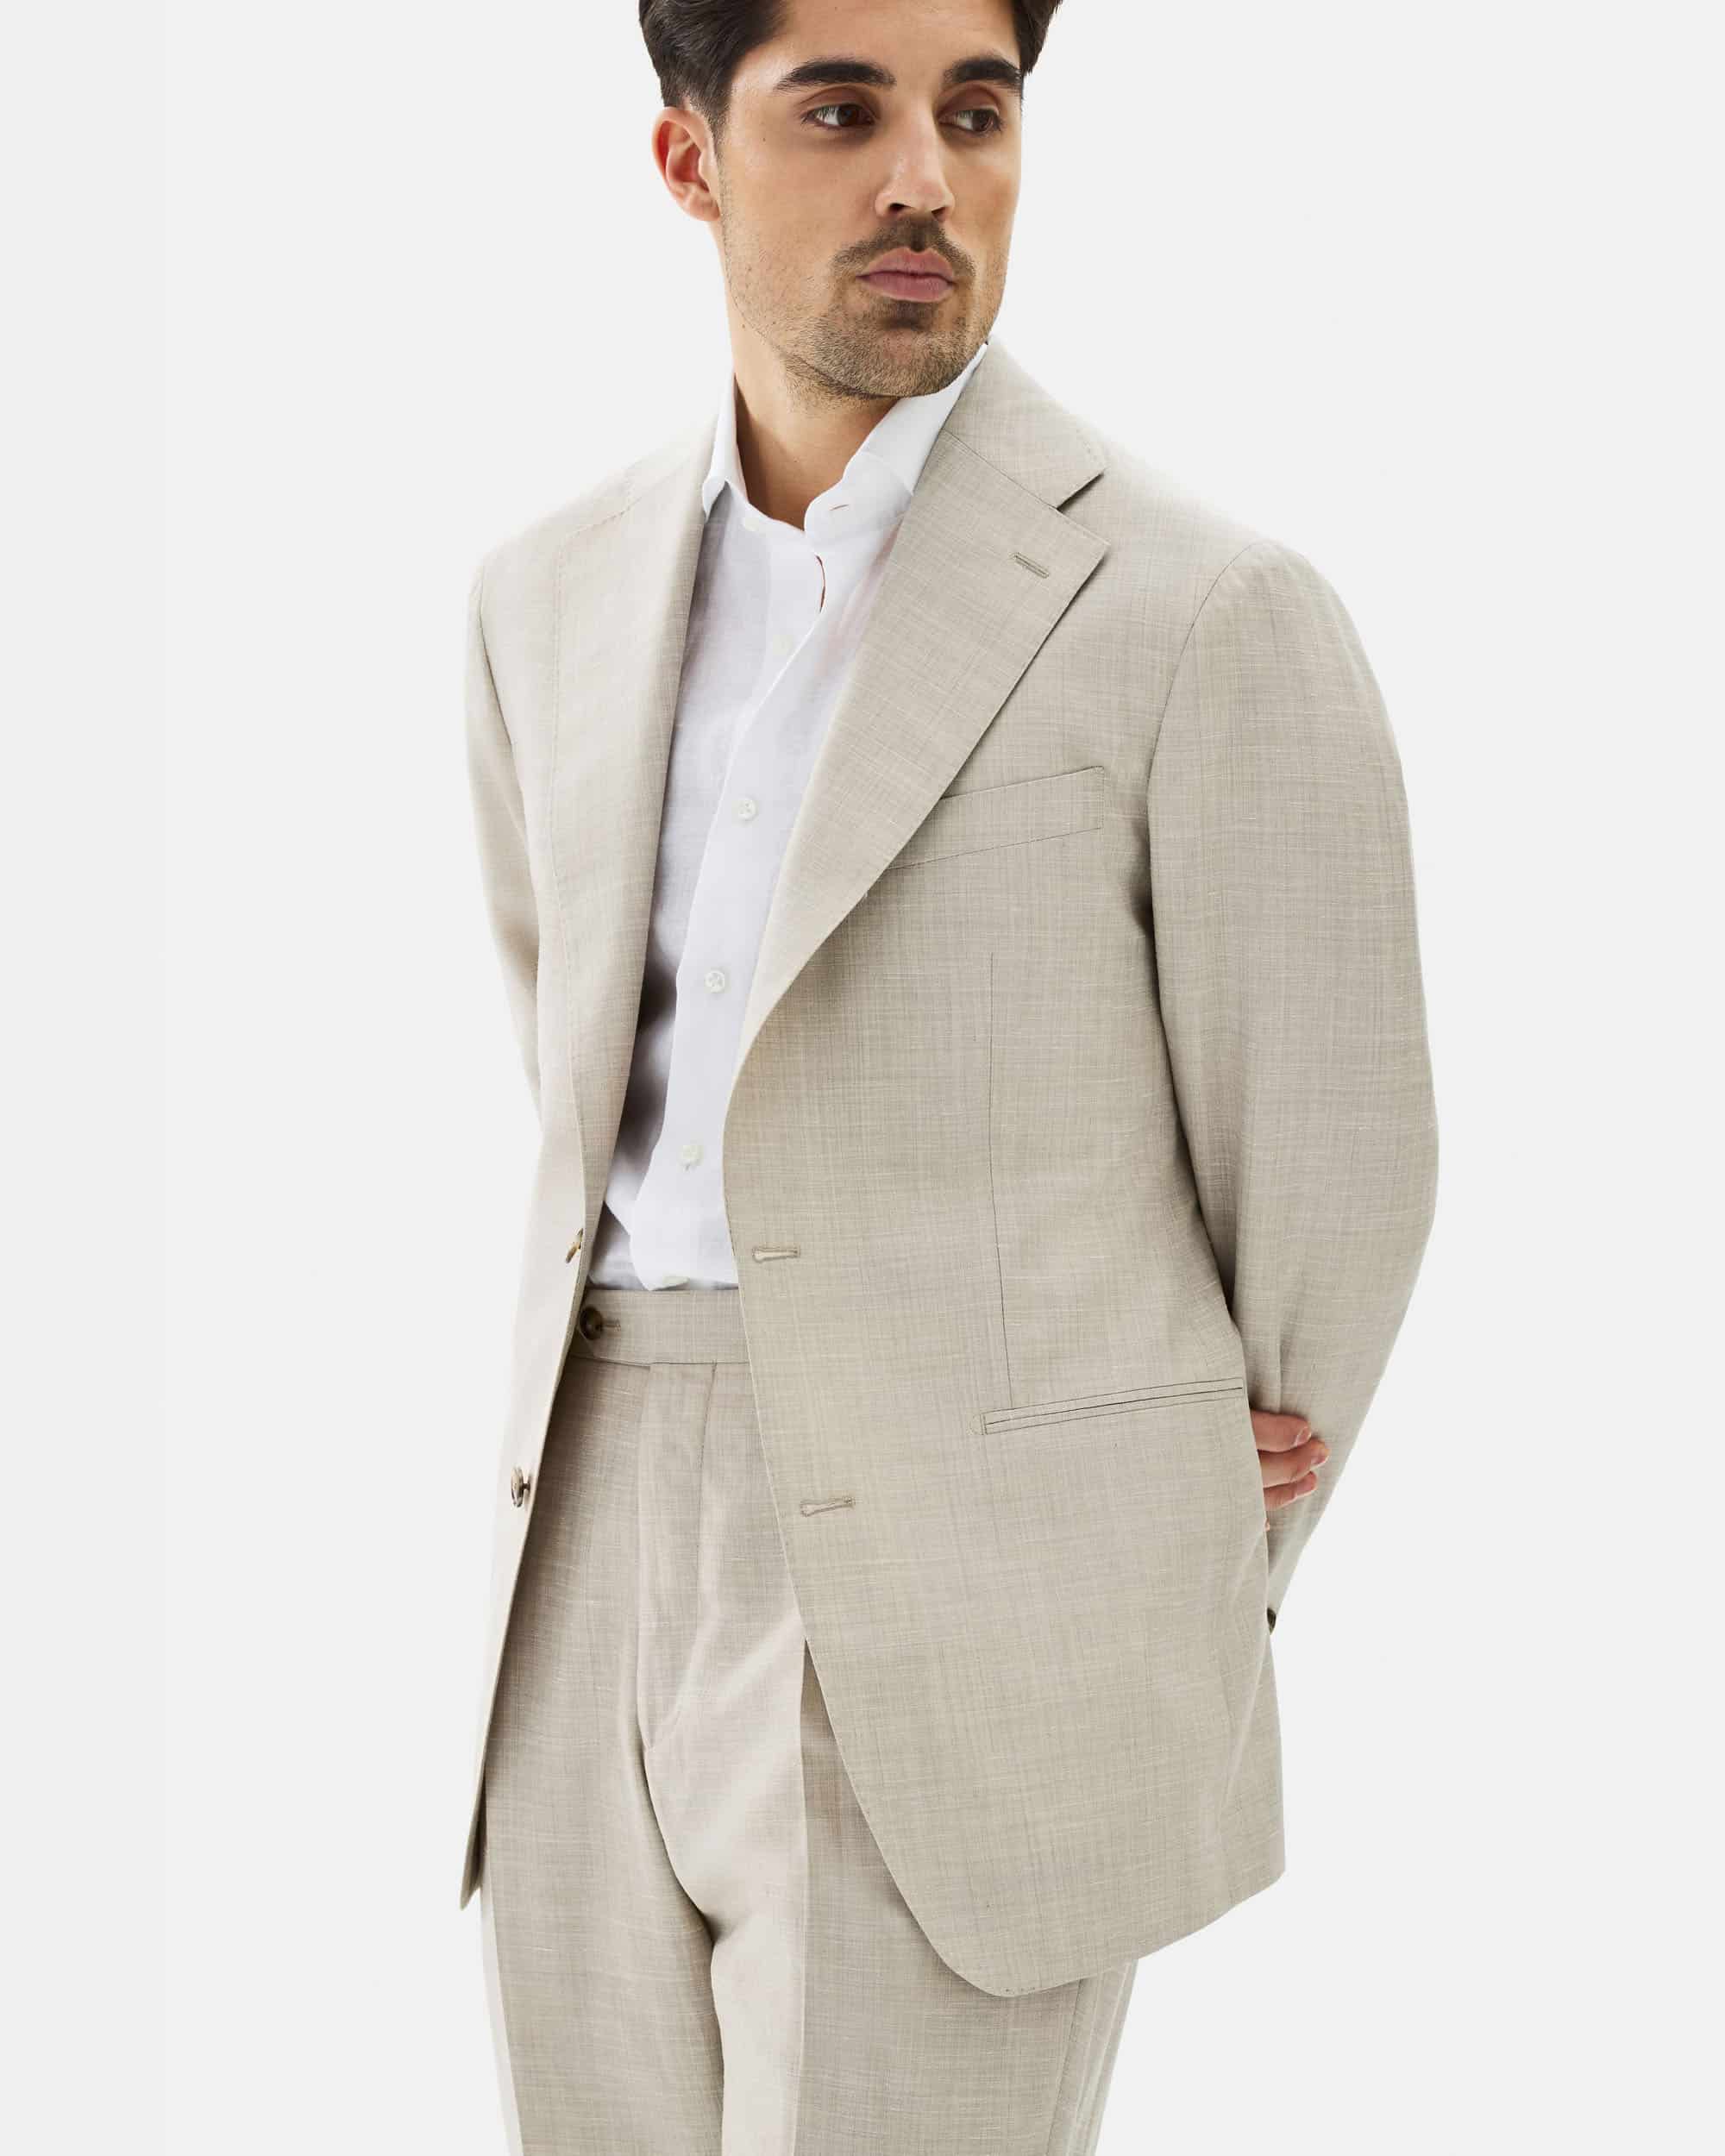 Suit WSL beige image 2